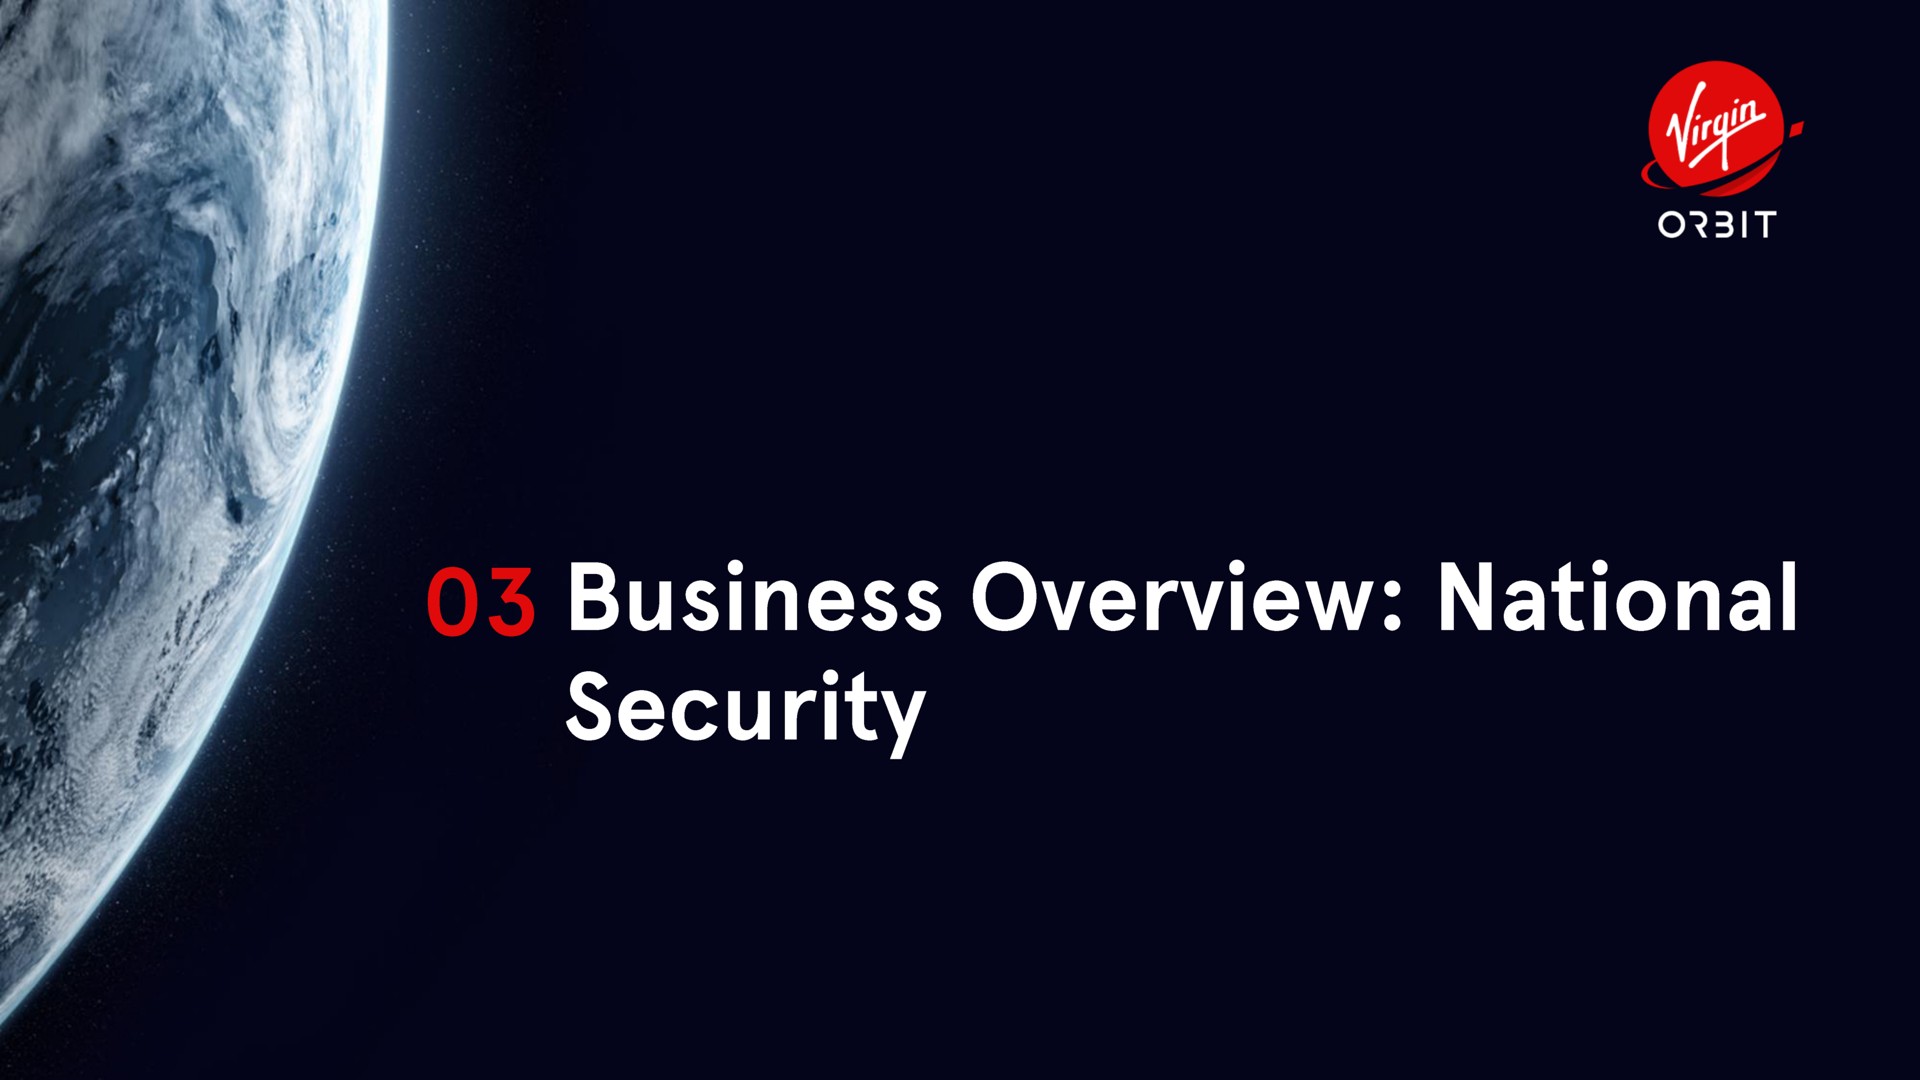 business overview national security | Virgin Orbit